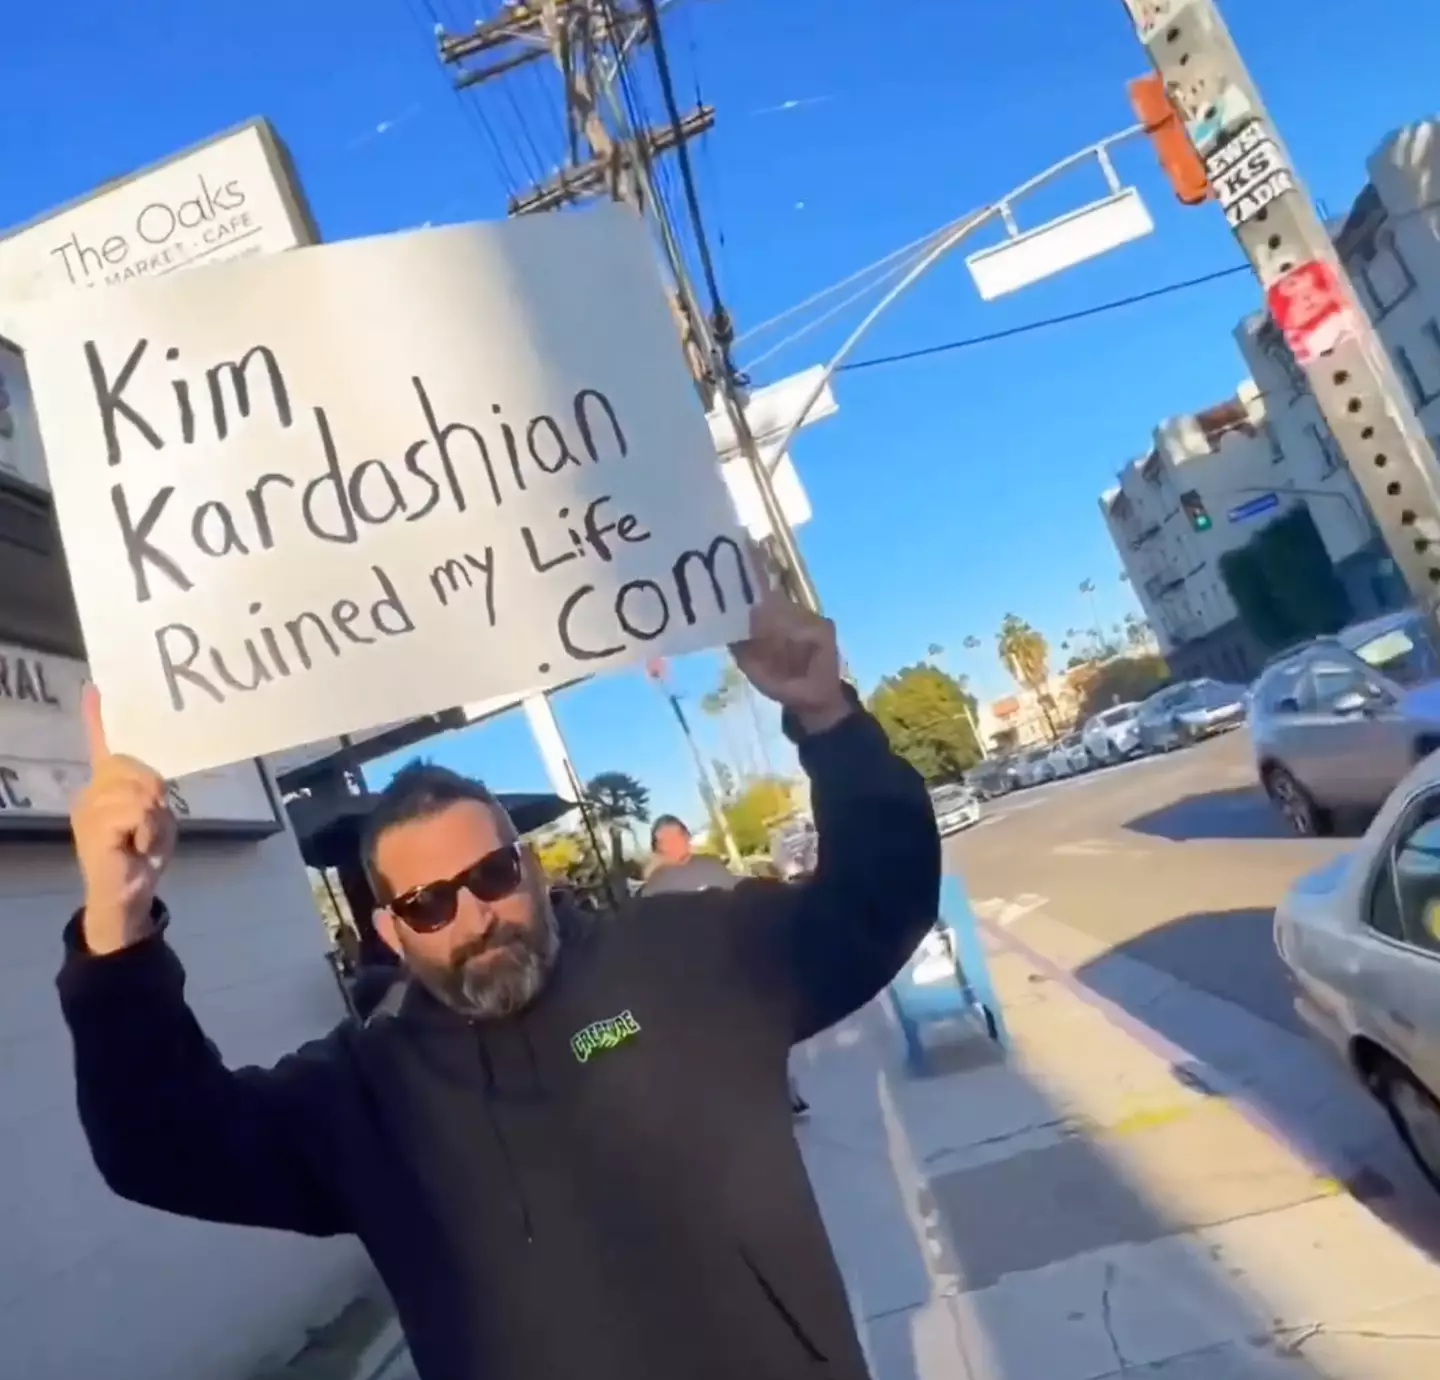 "Kim Kardashian ruined my life."